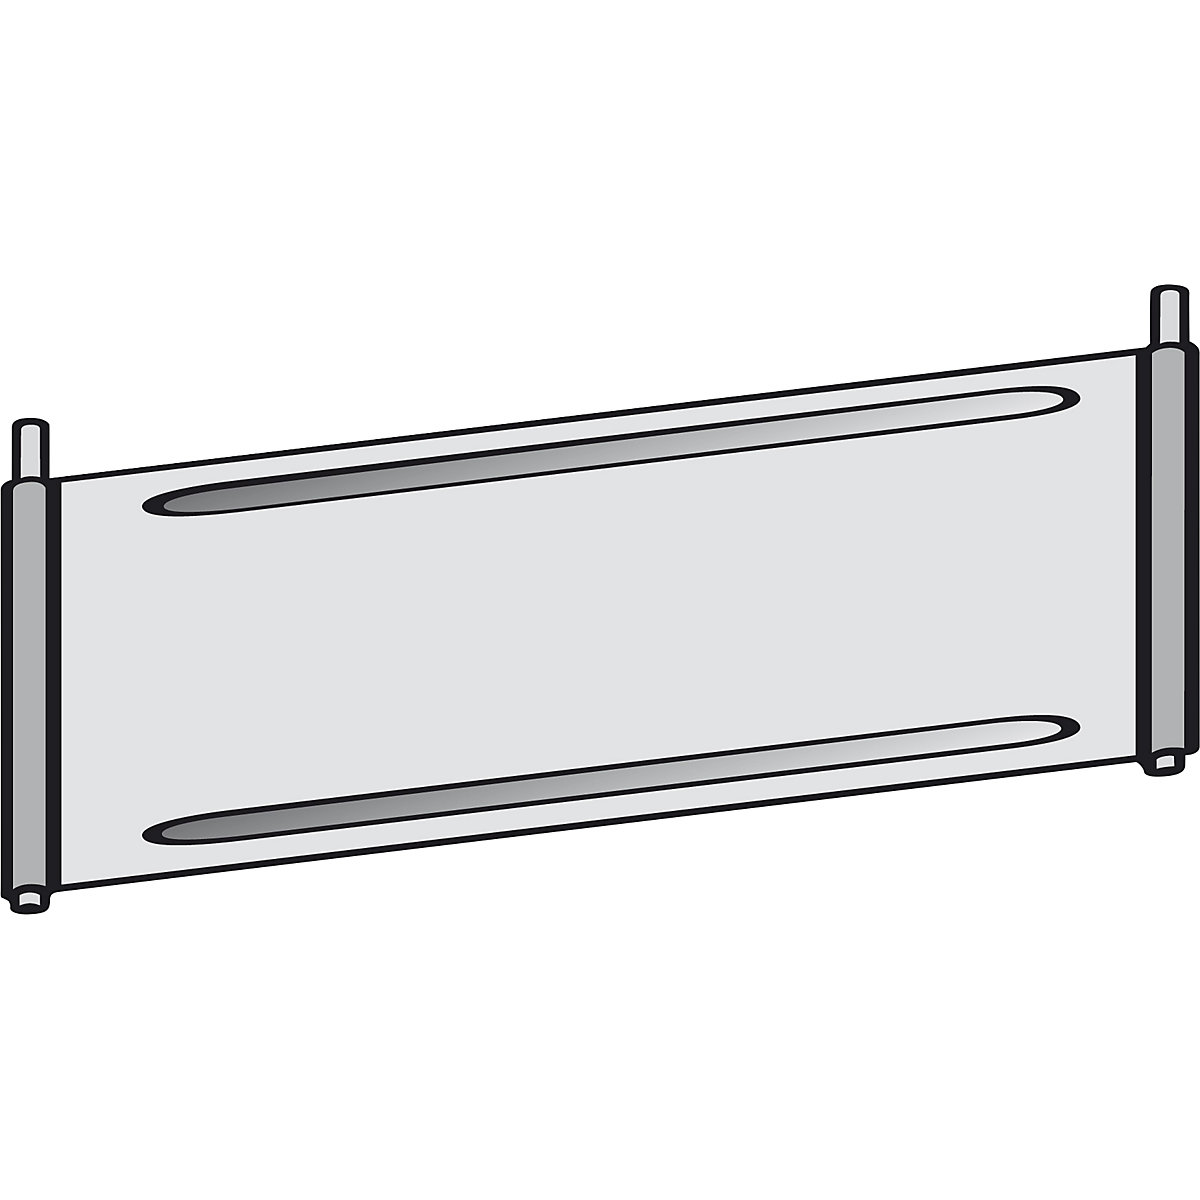 Shelf partition for compartment shelf unit – hofe, zinc-plated, for shelf, WxD 1000 x 600 mm-1